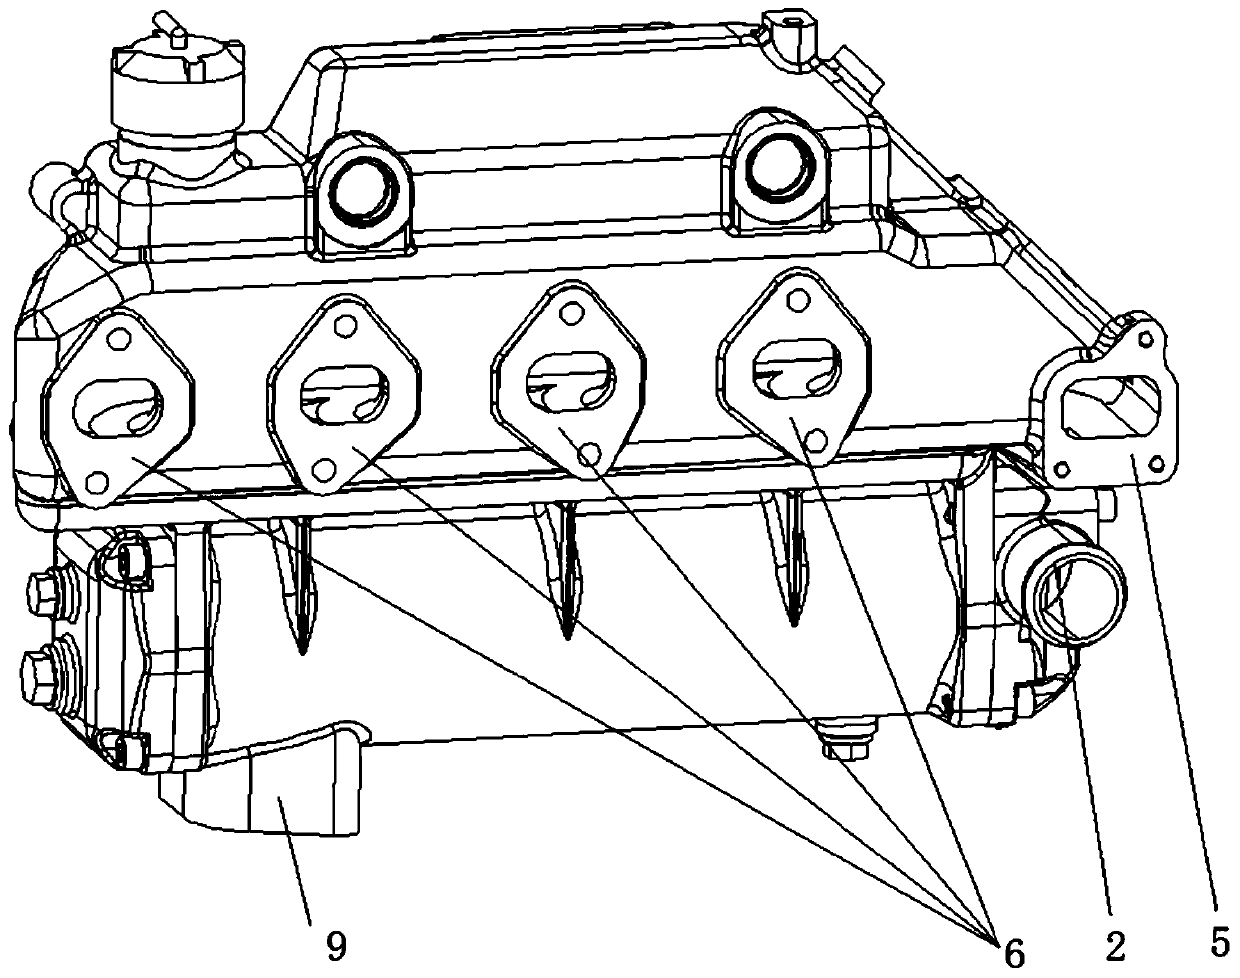 Integrated heat exchange system of marine engine